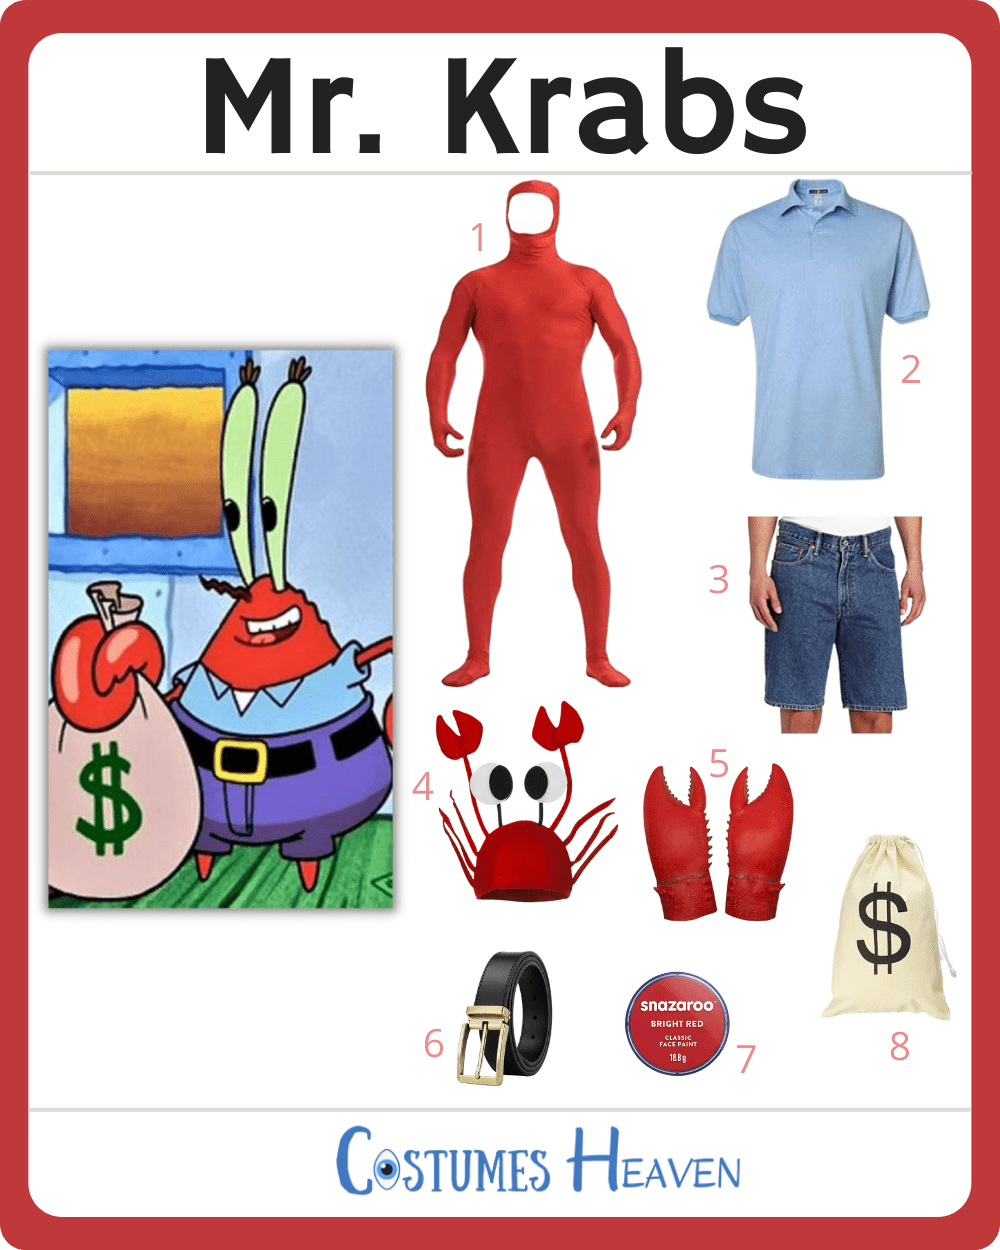 Mr. Krabs costume